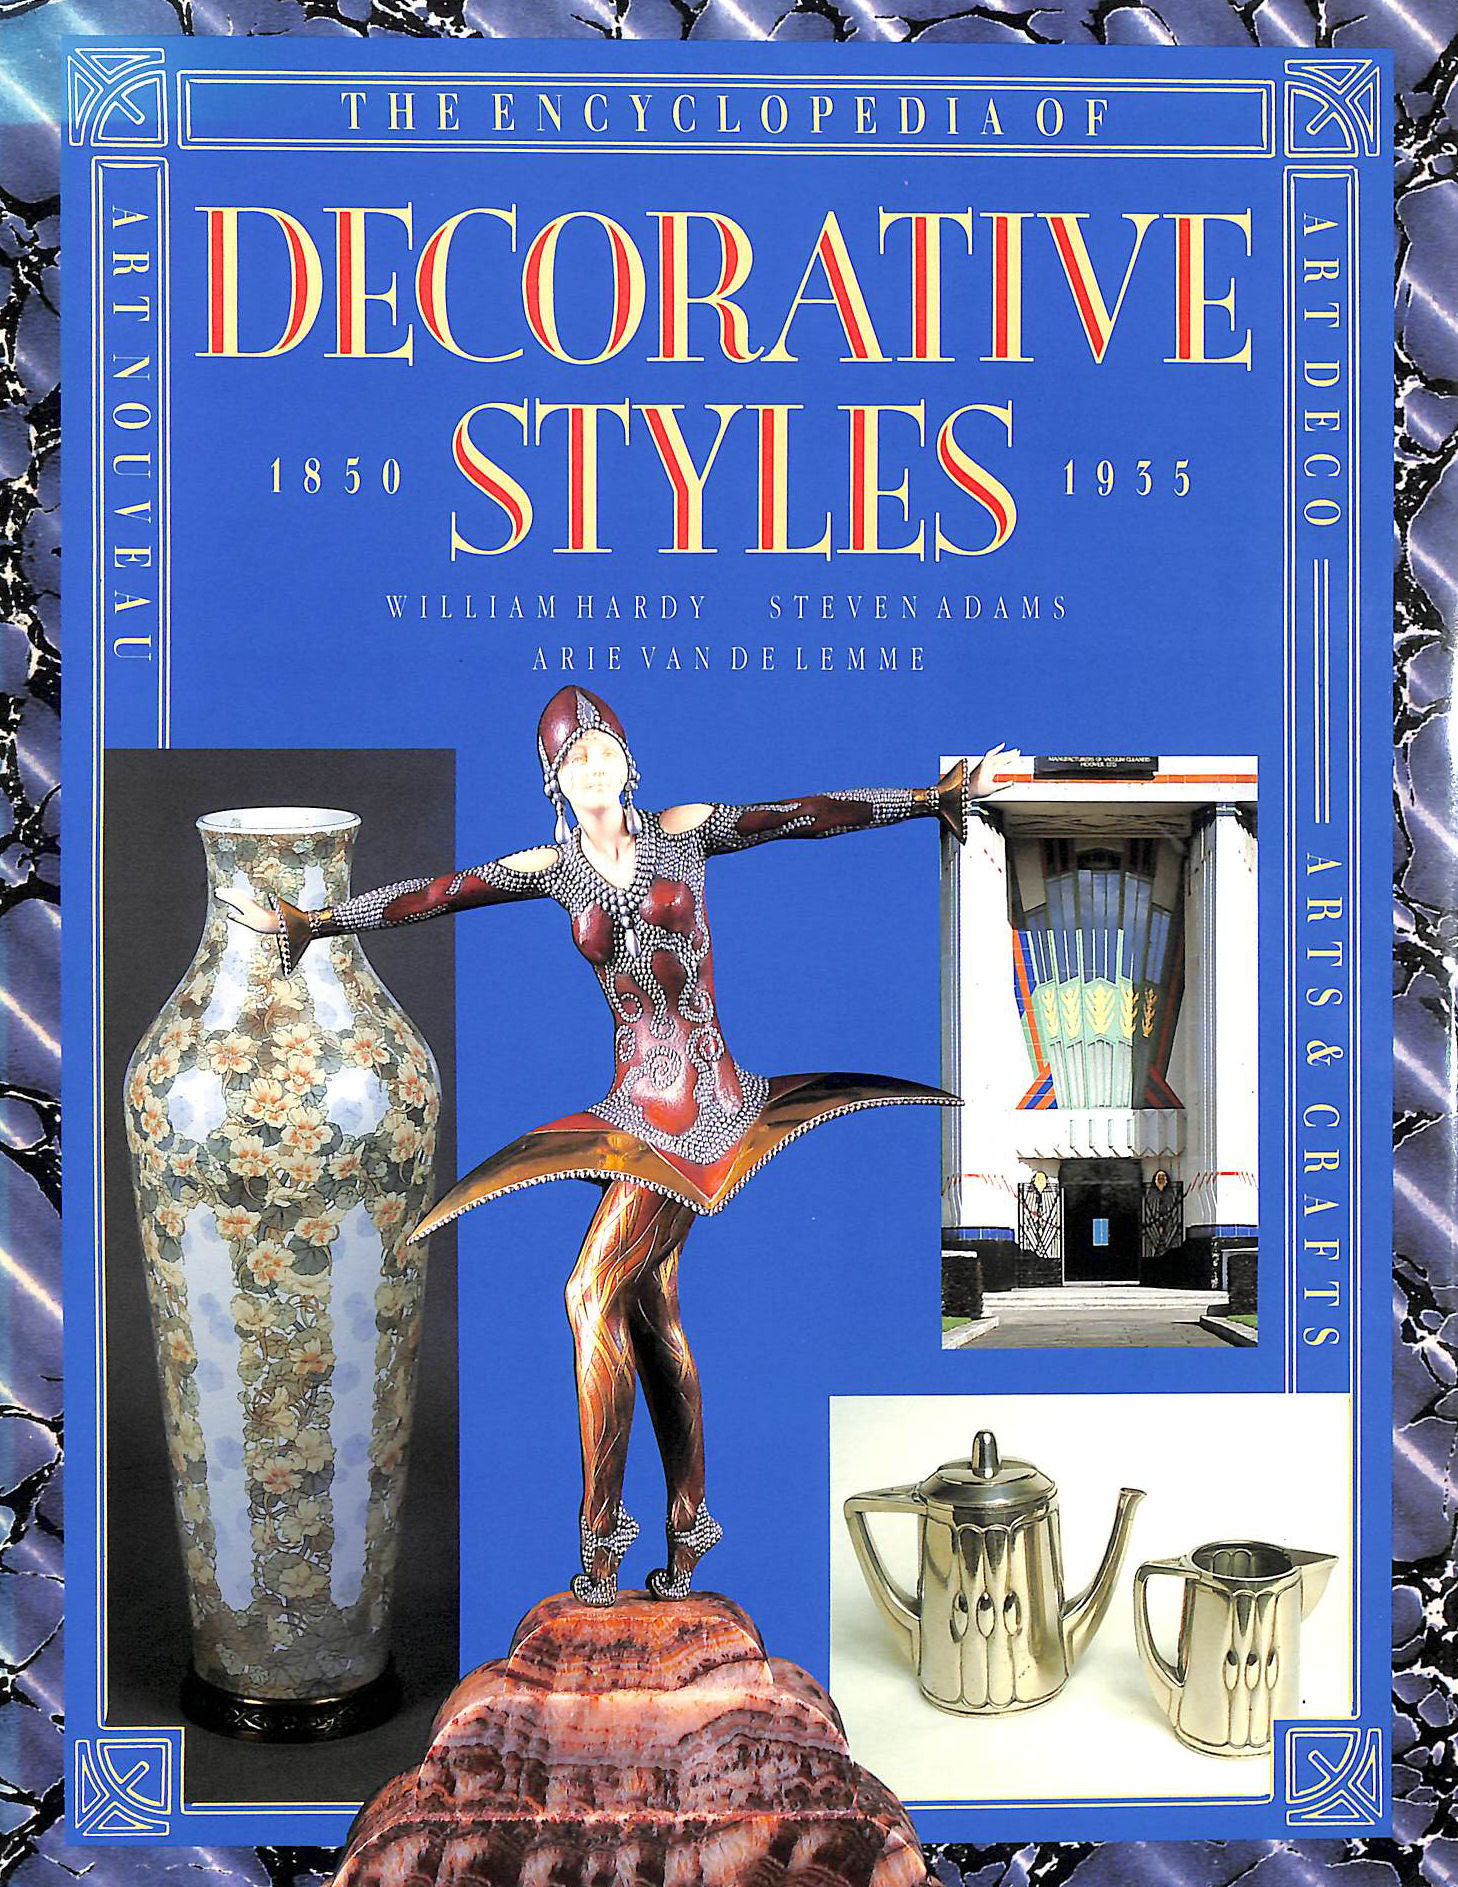 WILLIAM HARDY; STEVEN ADAMS; ARIE VAN DE LEMME - The Encyclopedia Of Decorative Styles 1850 - 1955